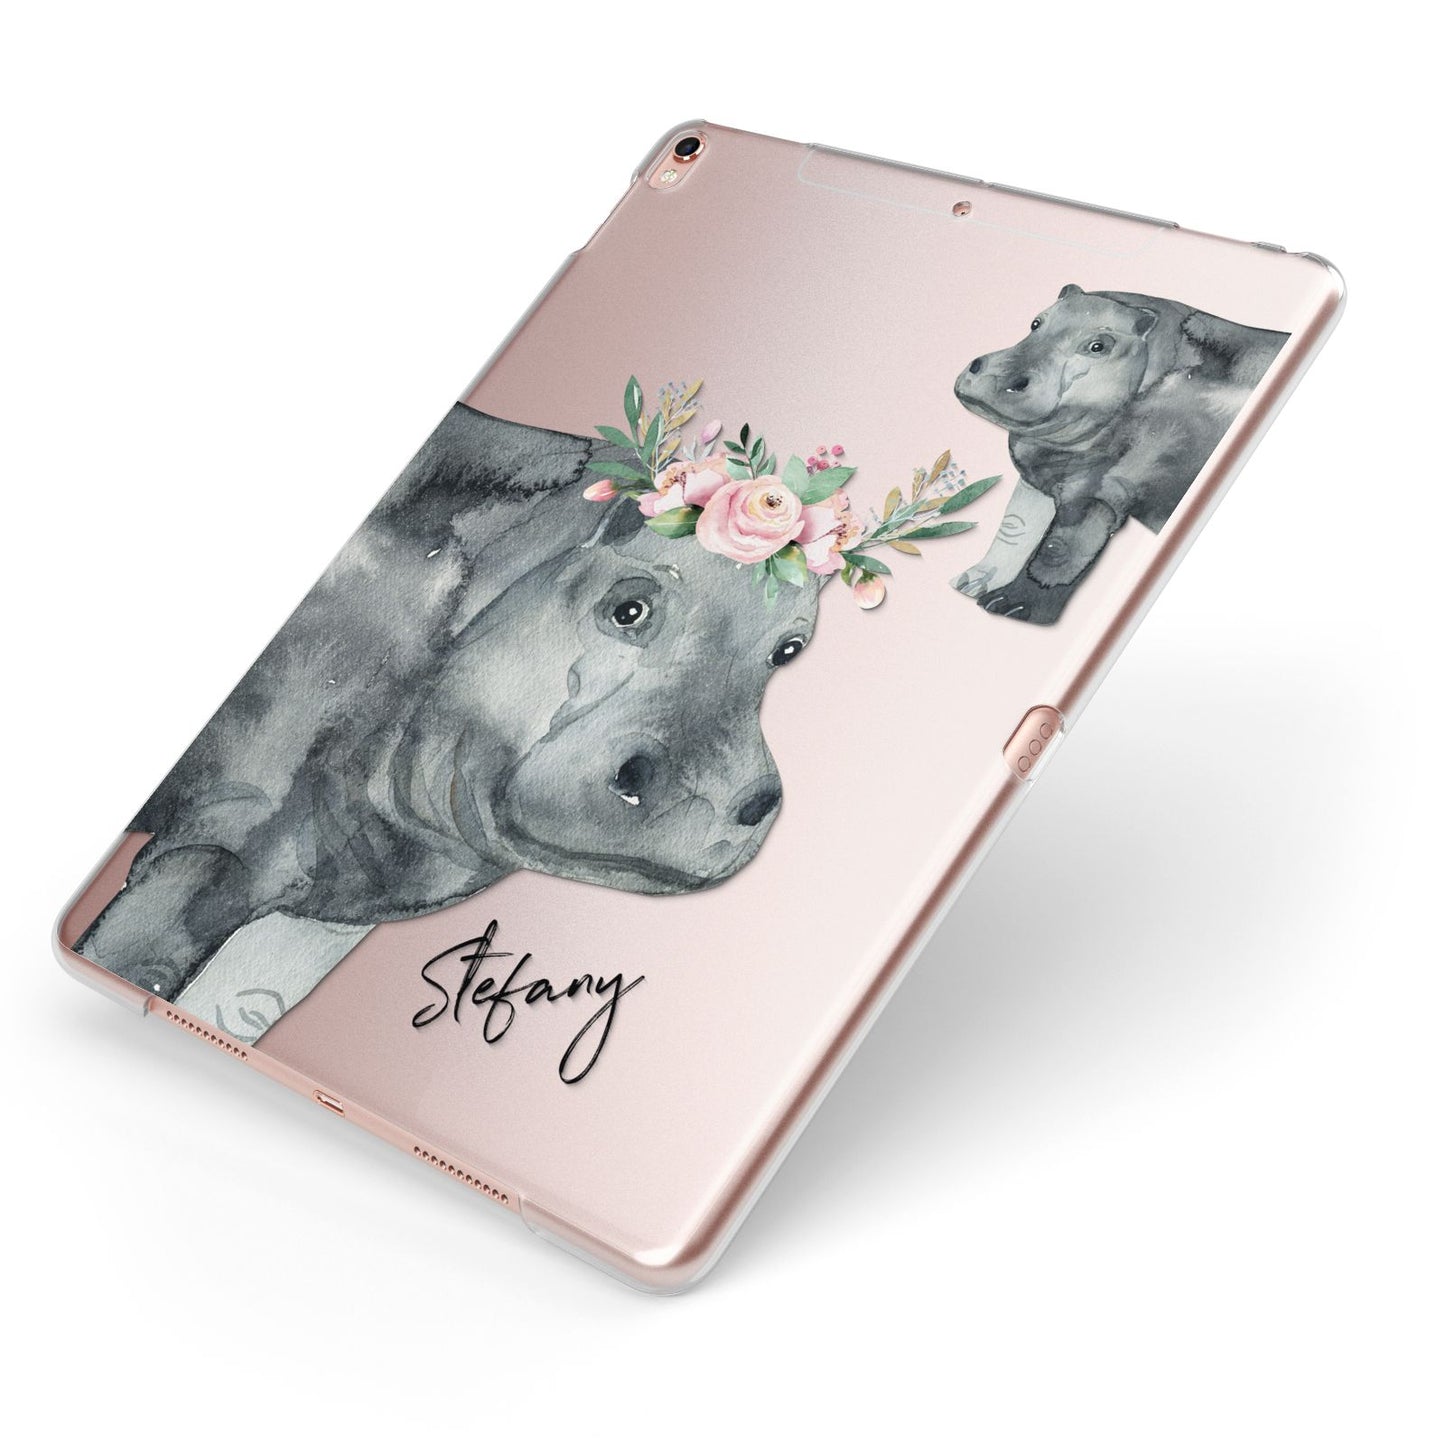 Personalised Hippopotamus Apple iPad Case on Rose Gold iPad Side View